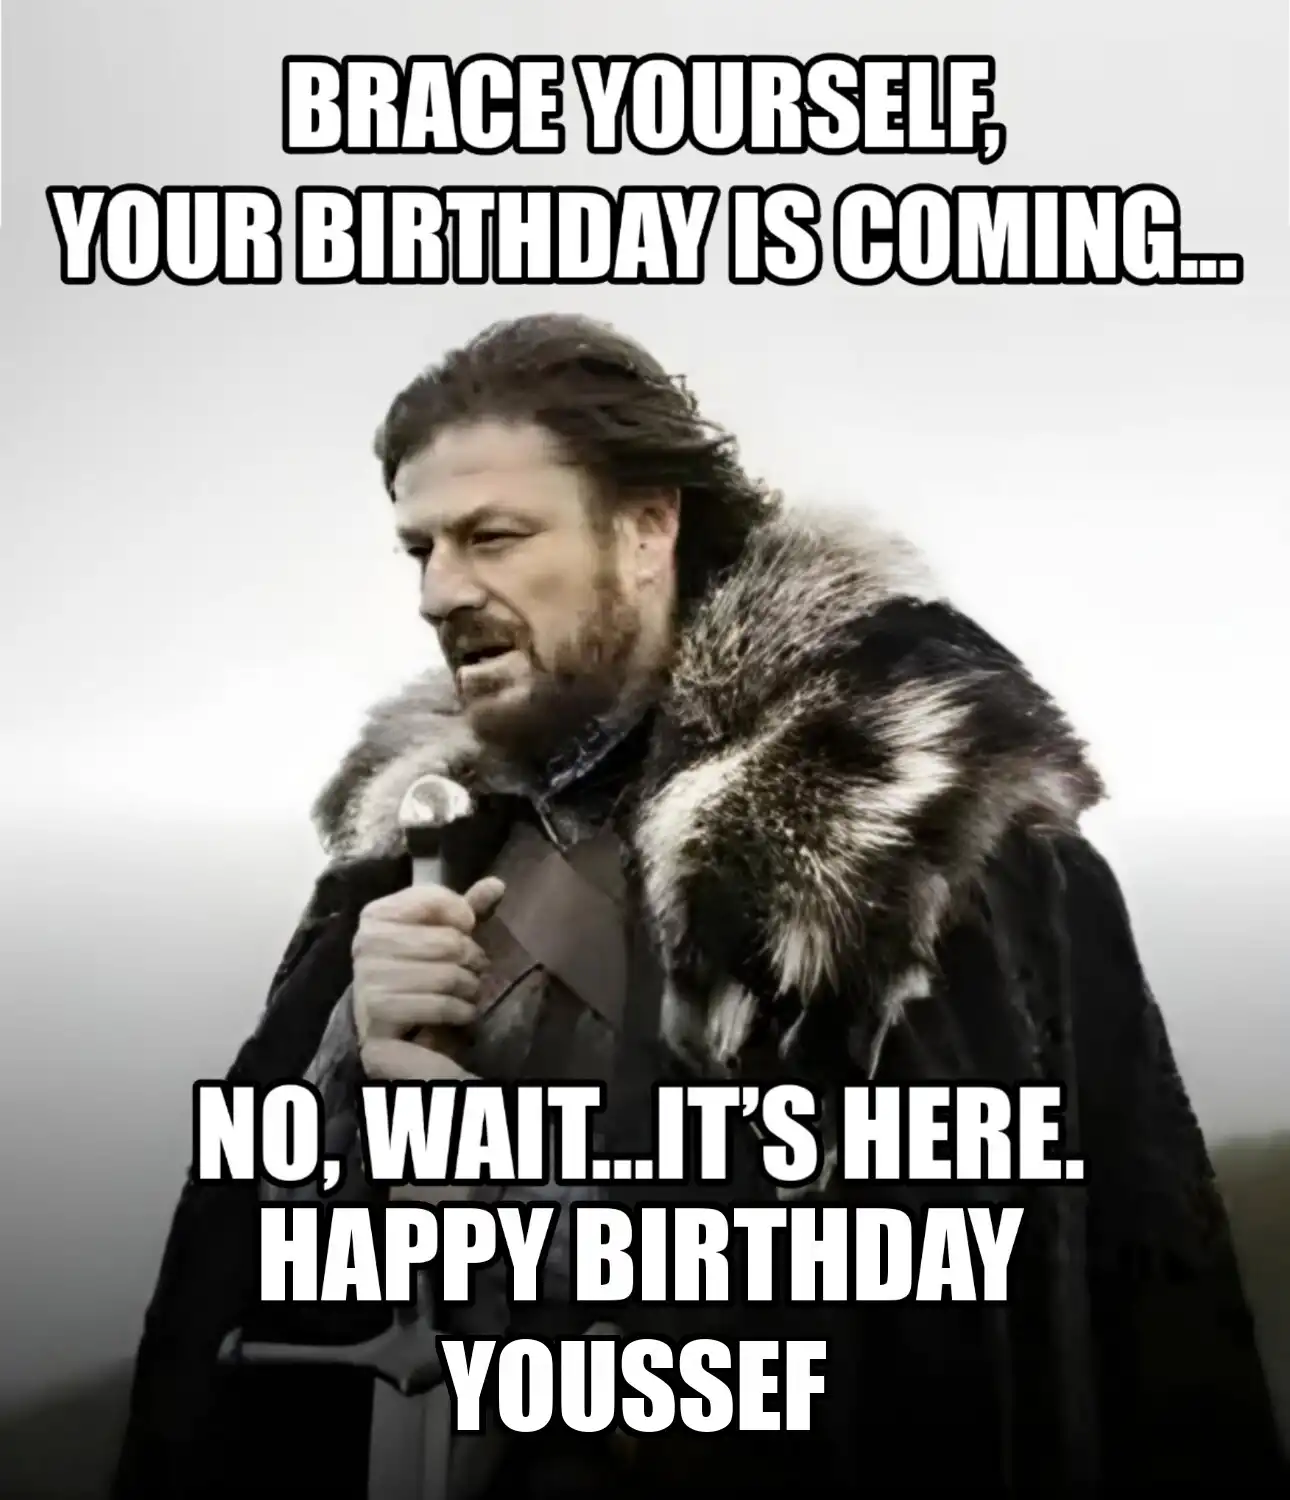 Happy Birthday Youssef Brace Yourself Your Birthday Is Coming Meme